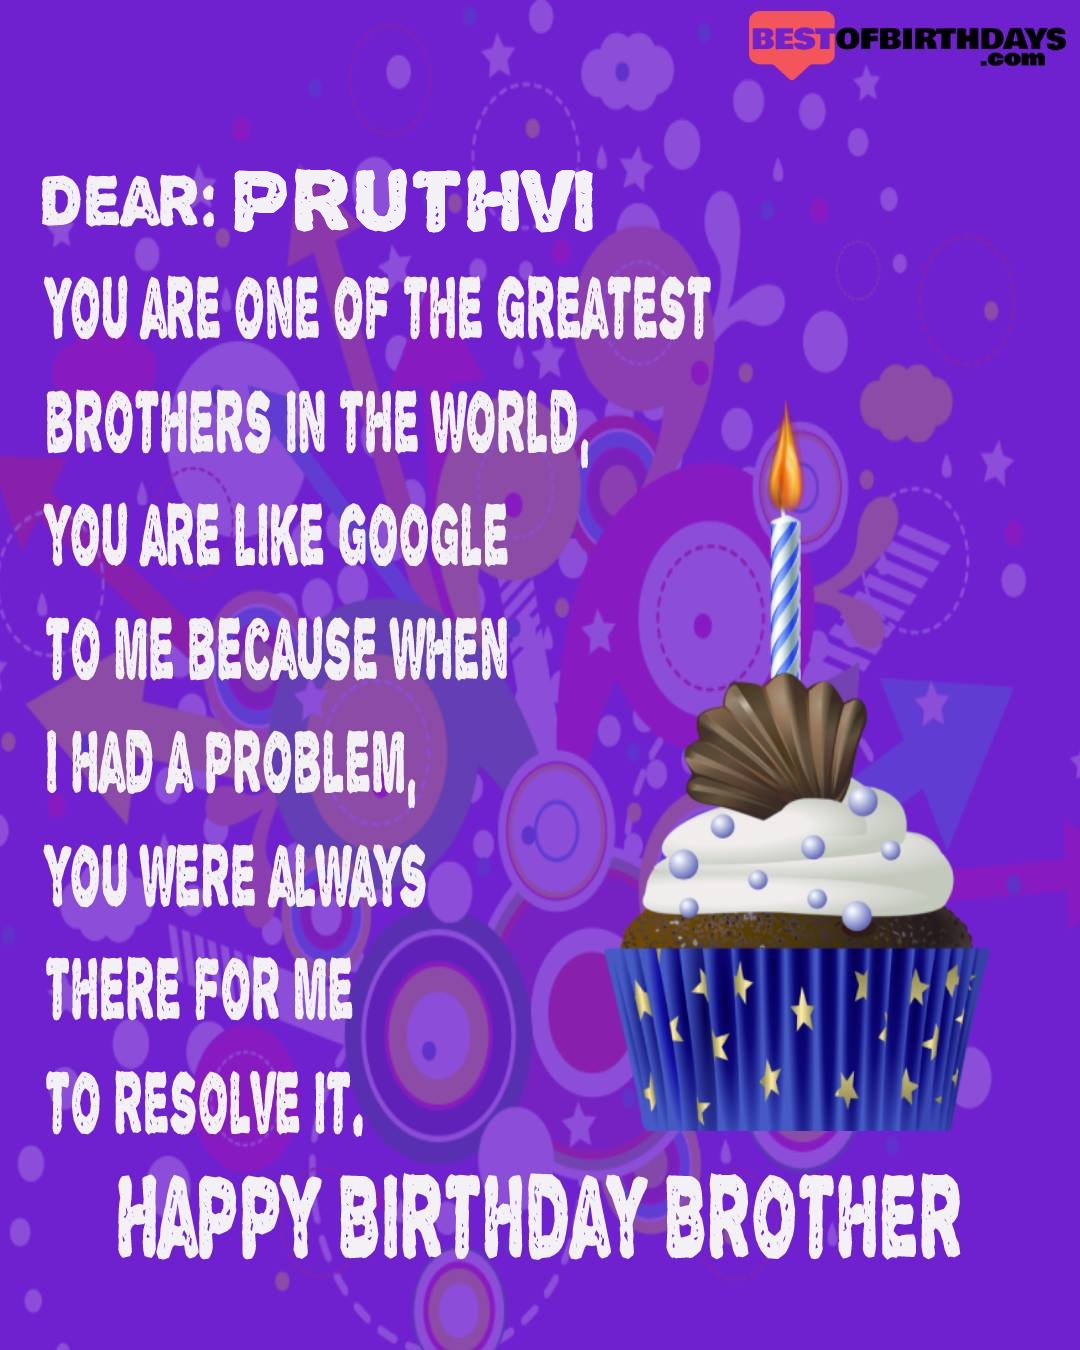 Happy birthday pruthvi bhai brother bro